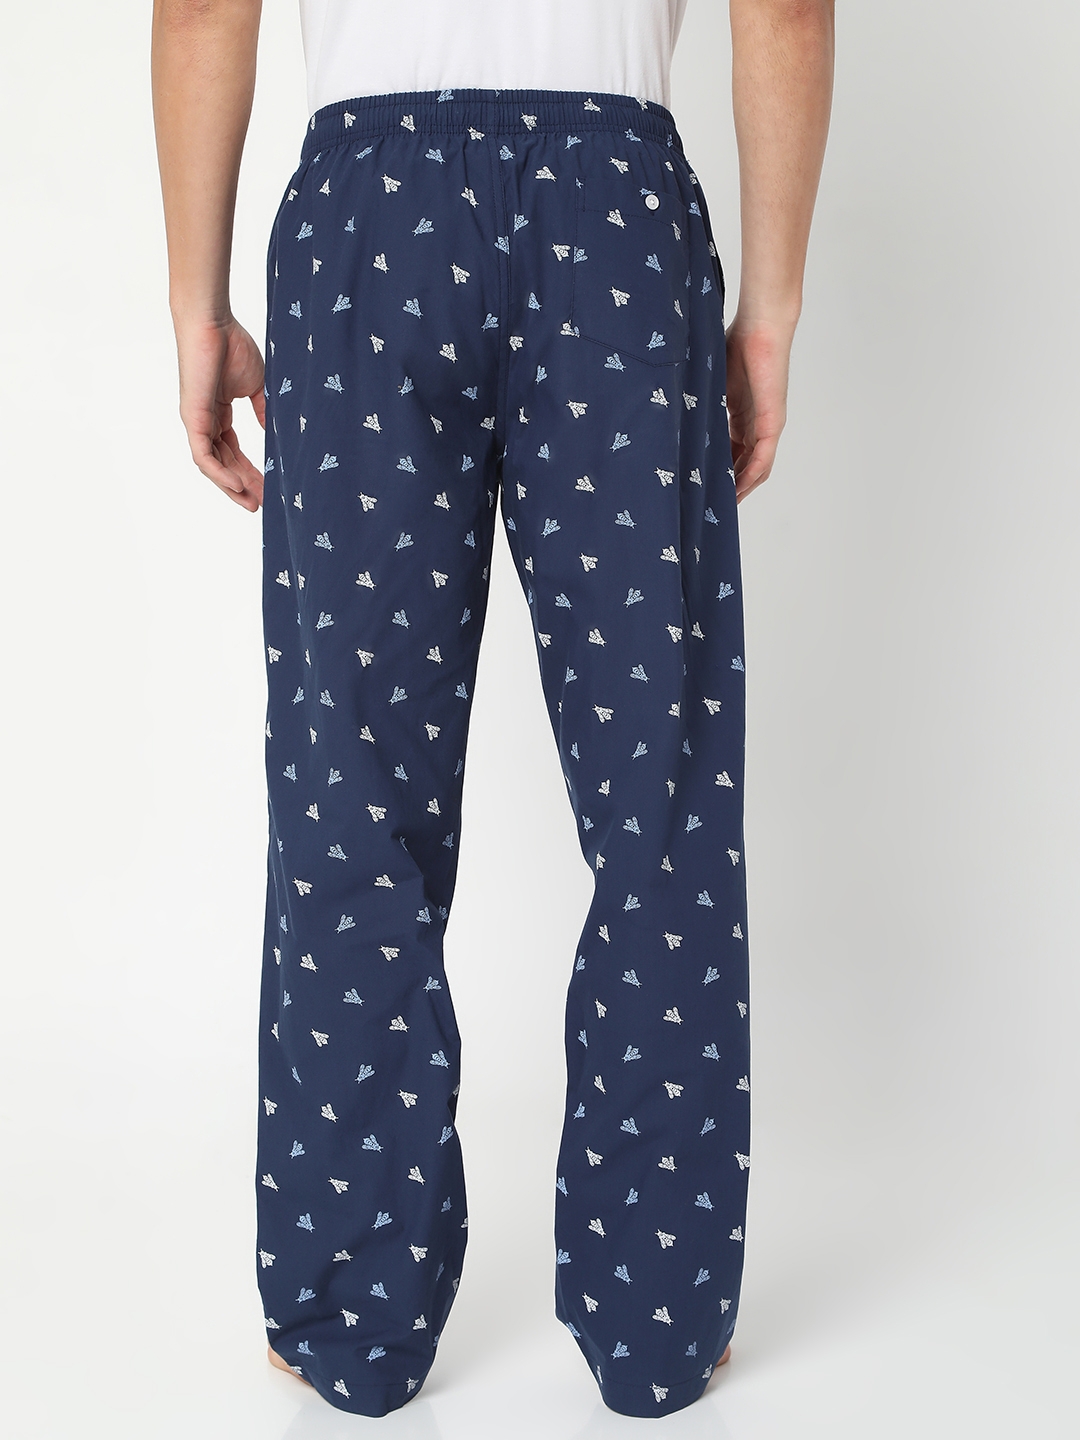 spykar | Underjeans by Spykar Men Navy Cotton Printed Pyjama 3